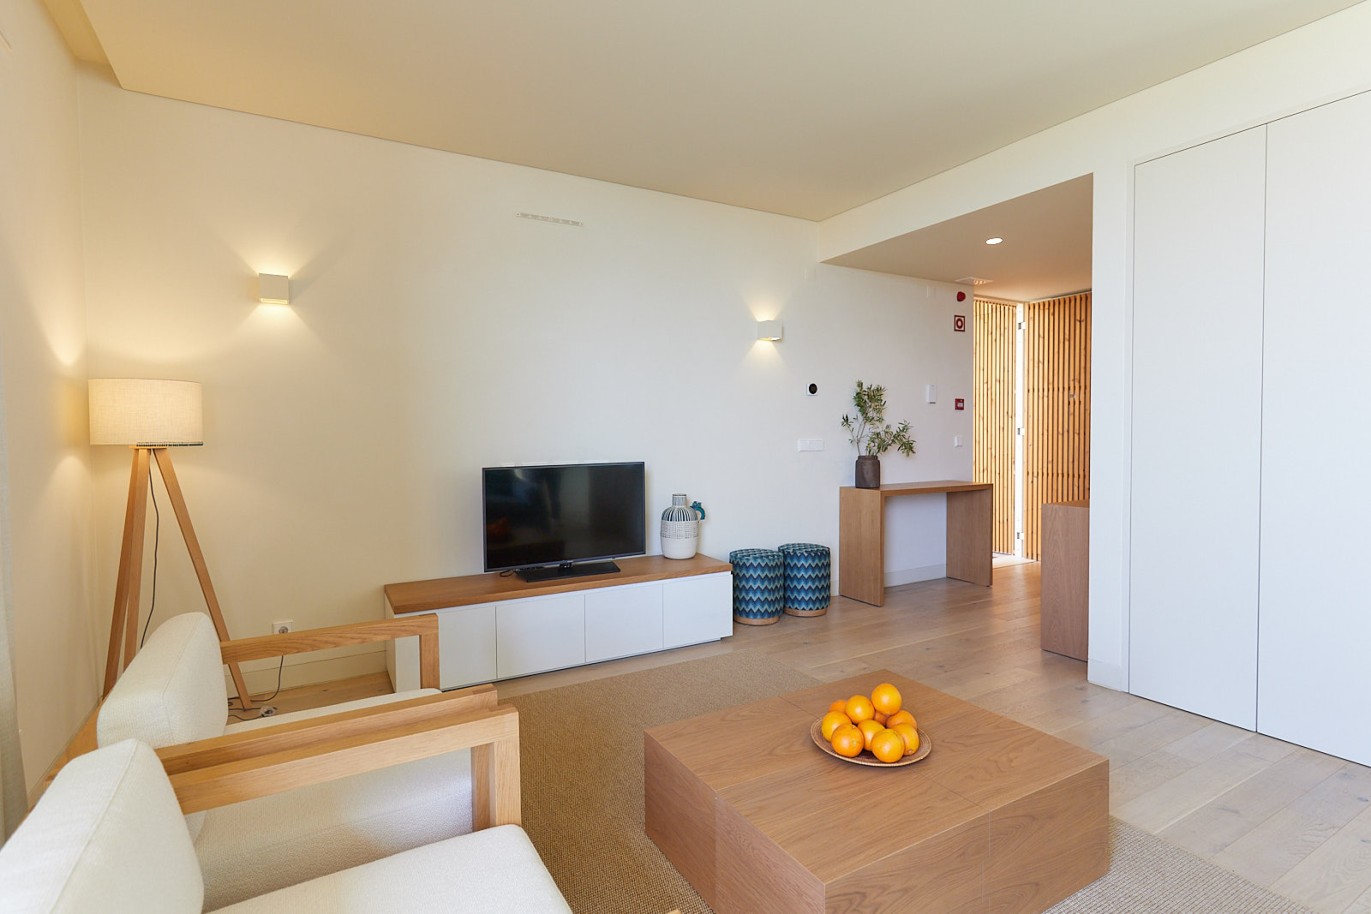 2 bedroom apartment in resort, for sale in Porches, Algarve_229233